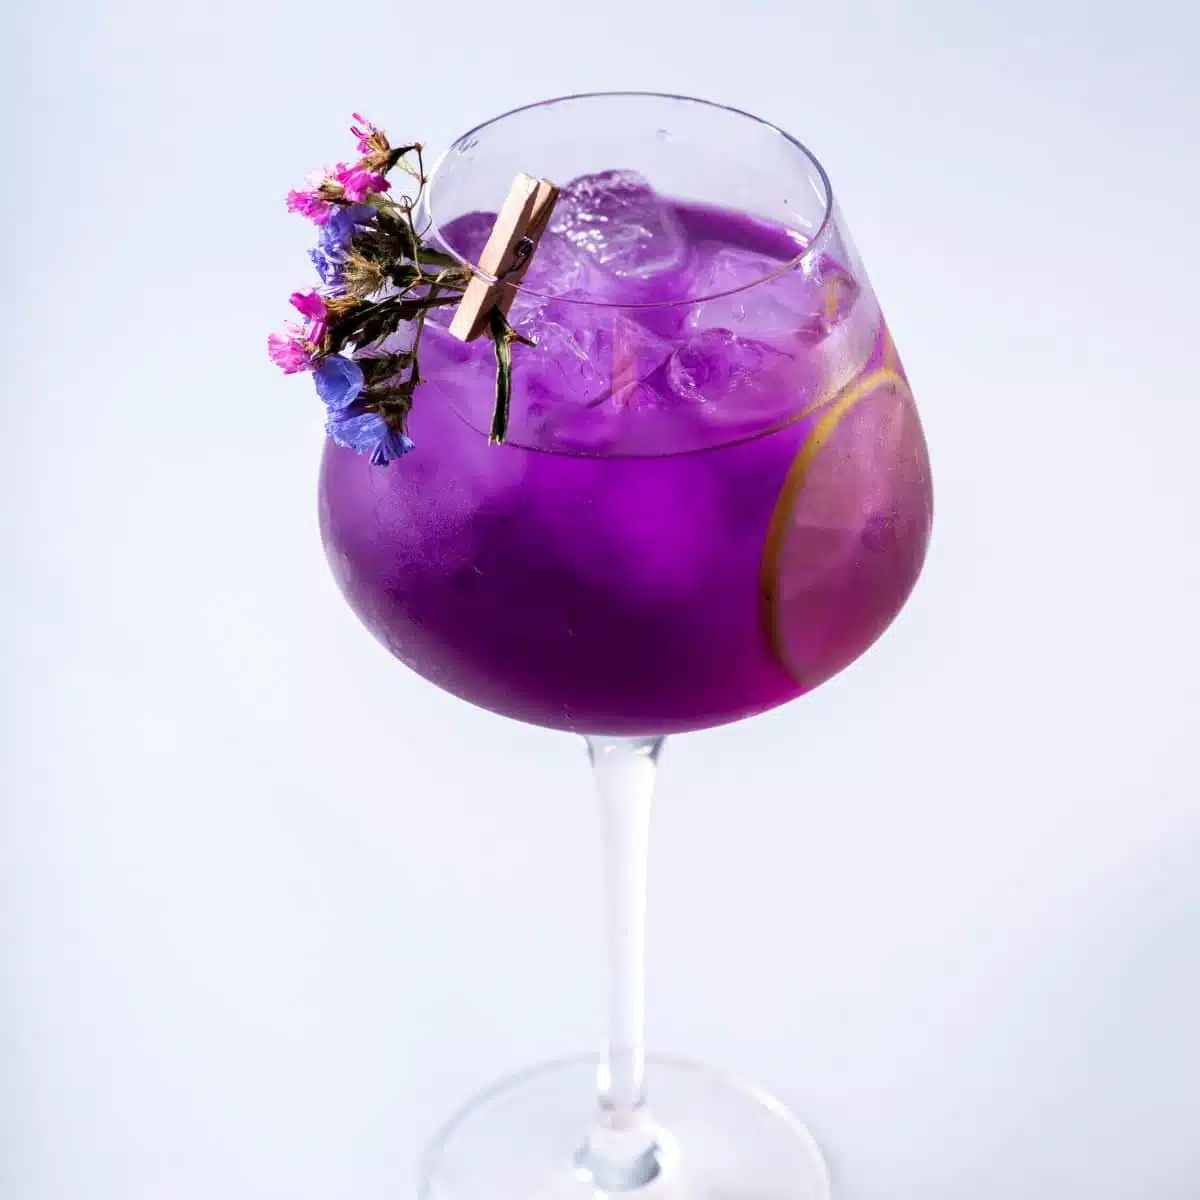 Empress Gin cocktail with flower garnish on white background